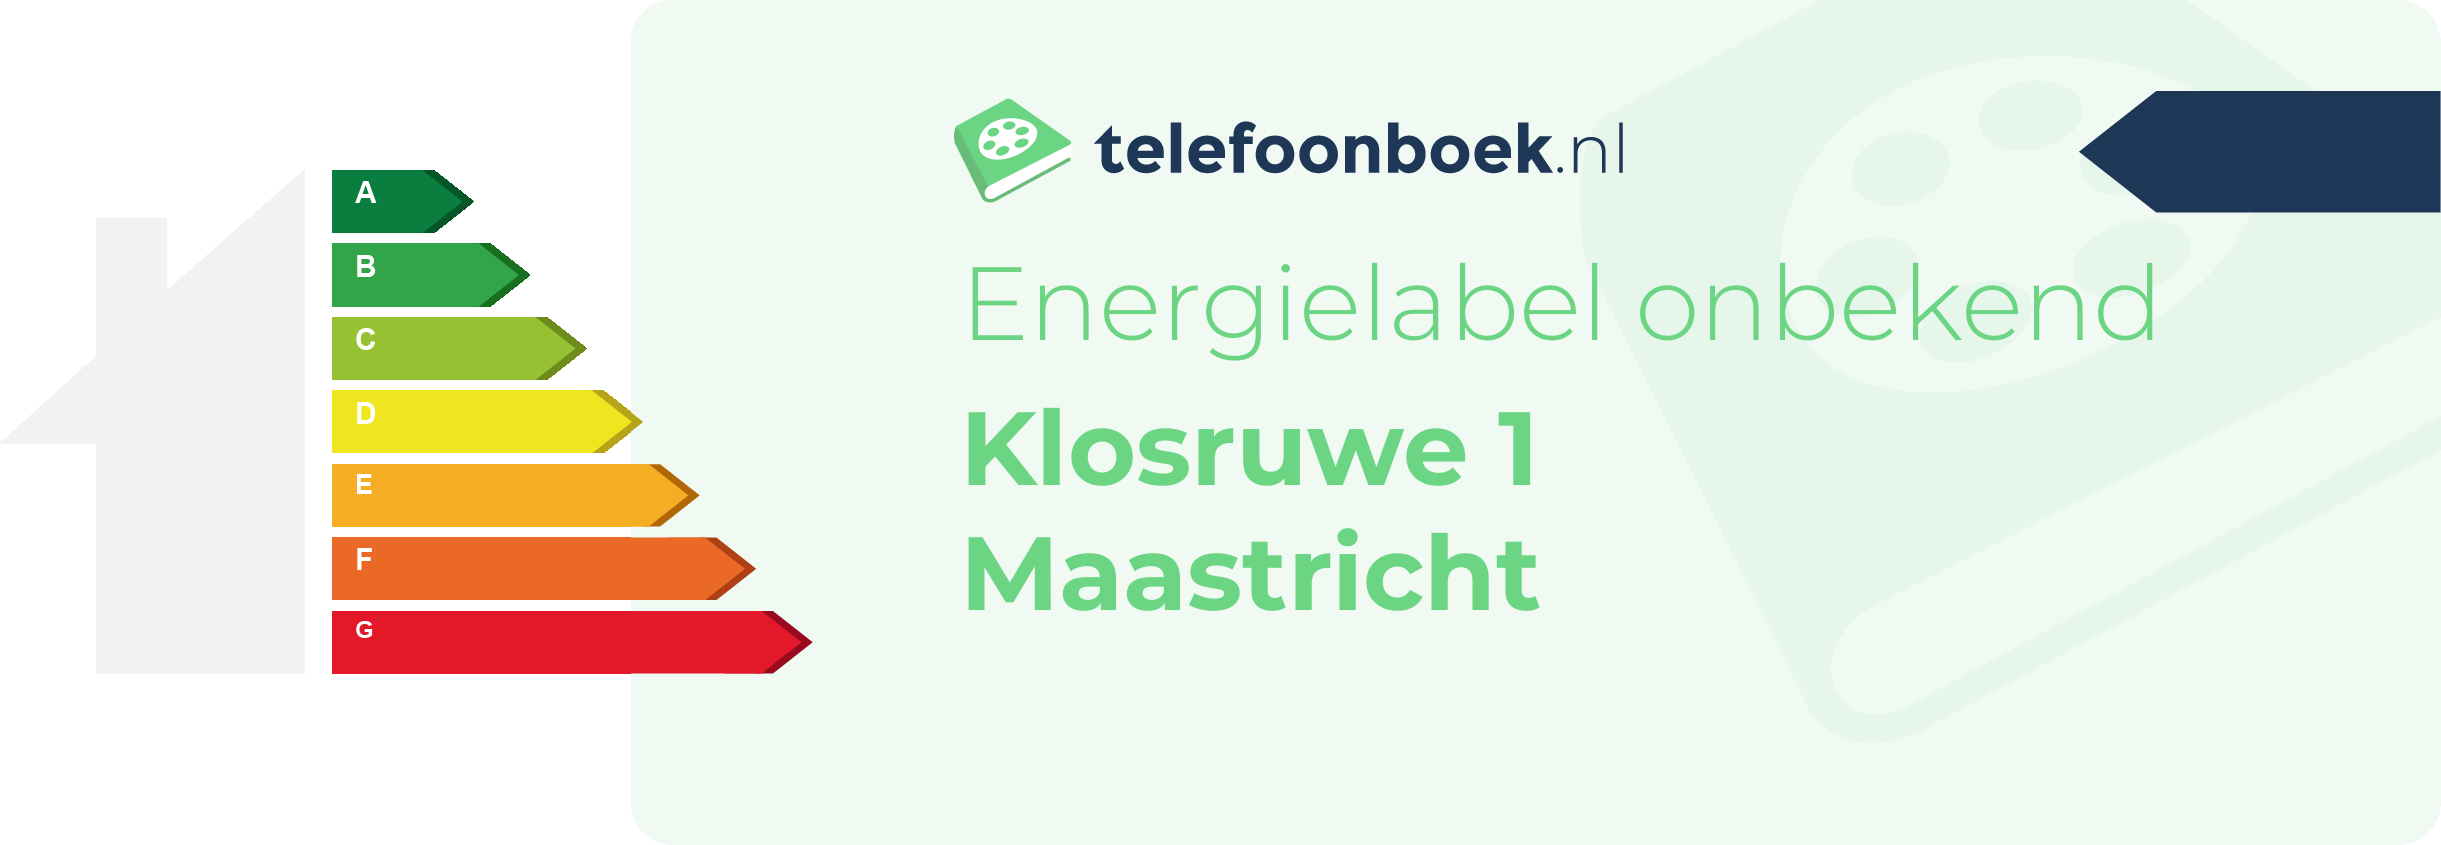 Energielabel Klosruwe 1 Maastricht